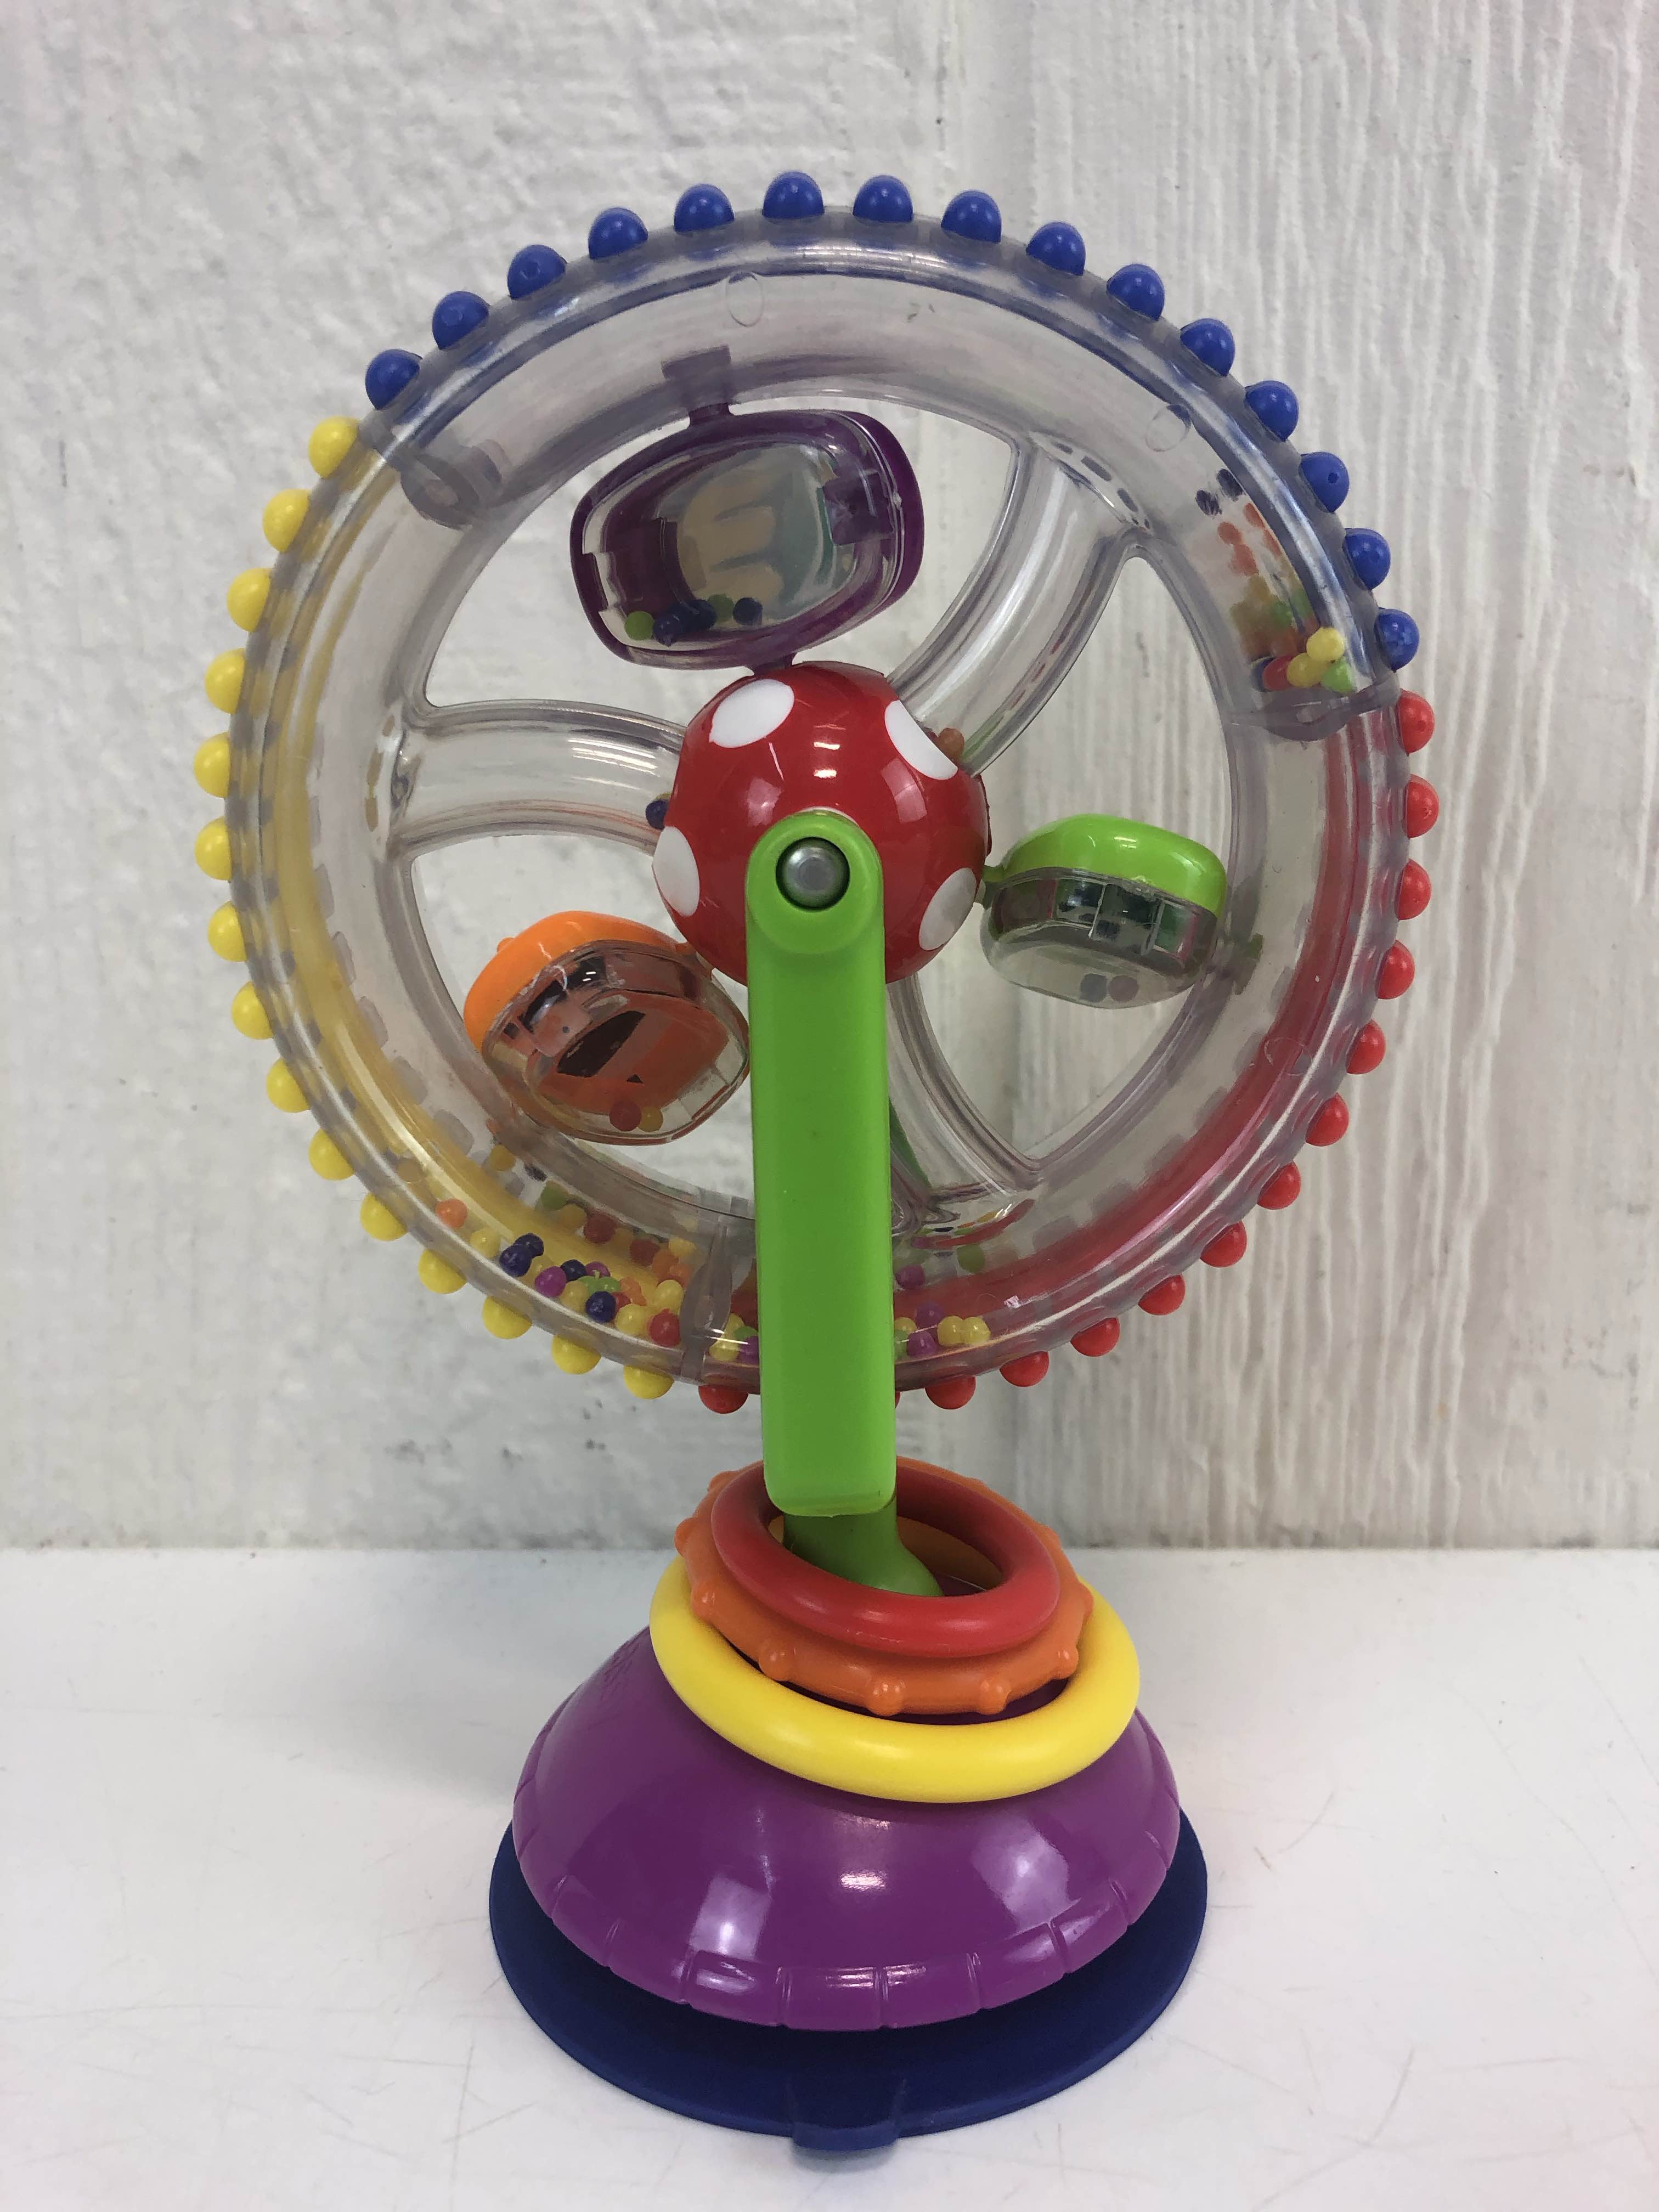 sassy wonder wheel activity center